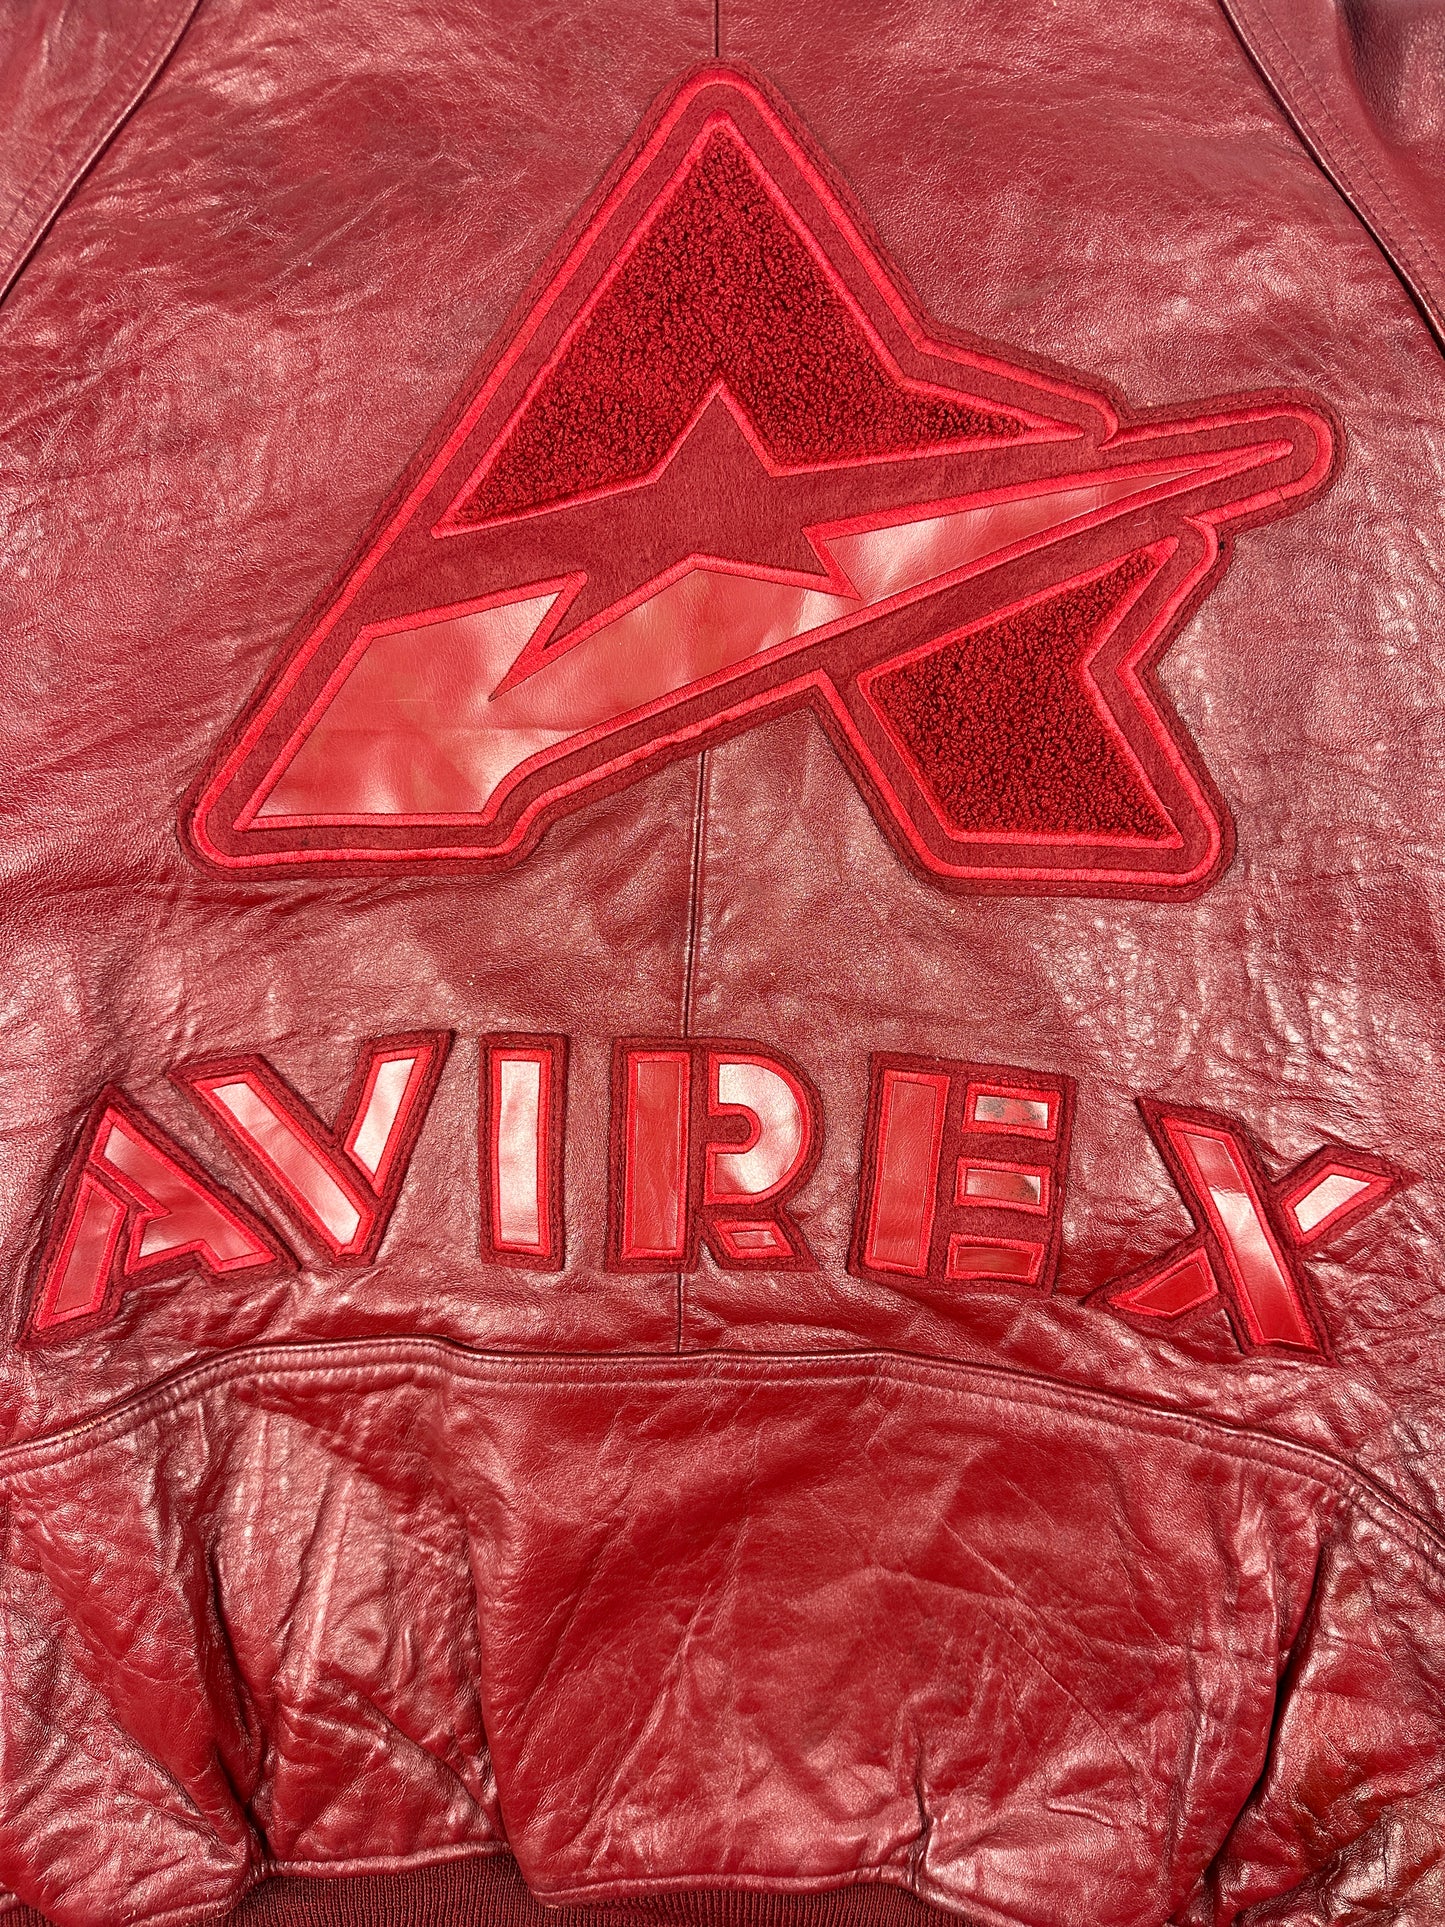 Vintage Avirex College Jacke burgunderrot XXL